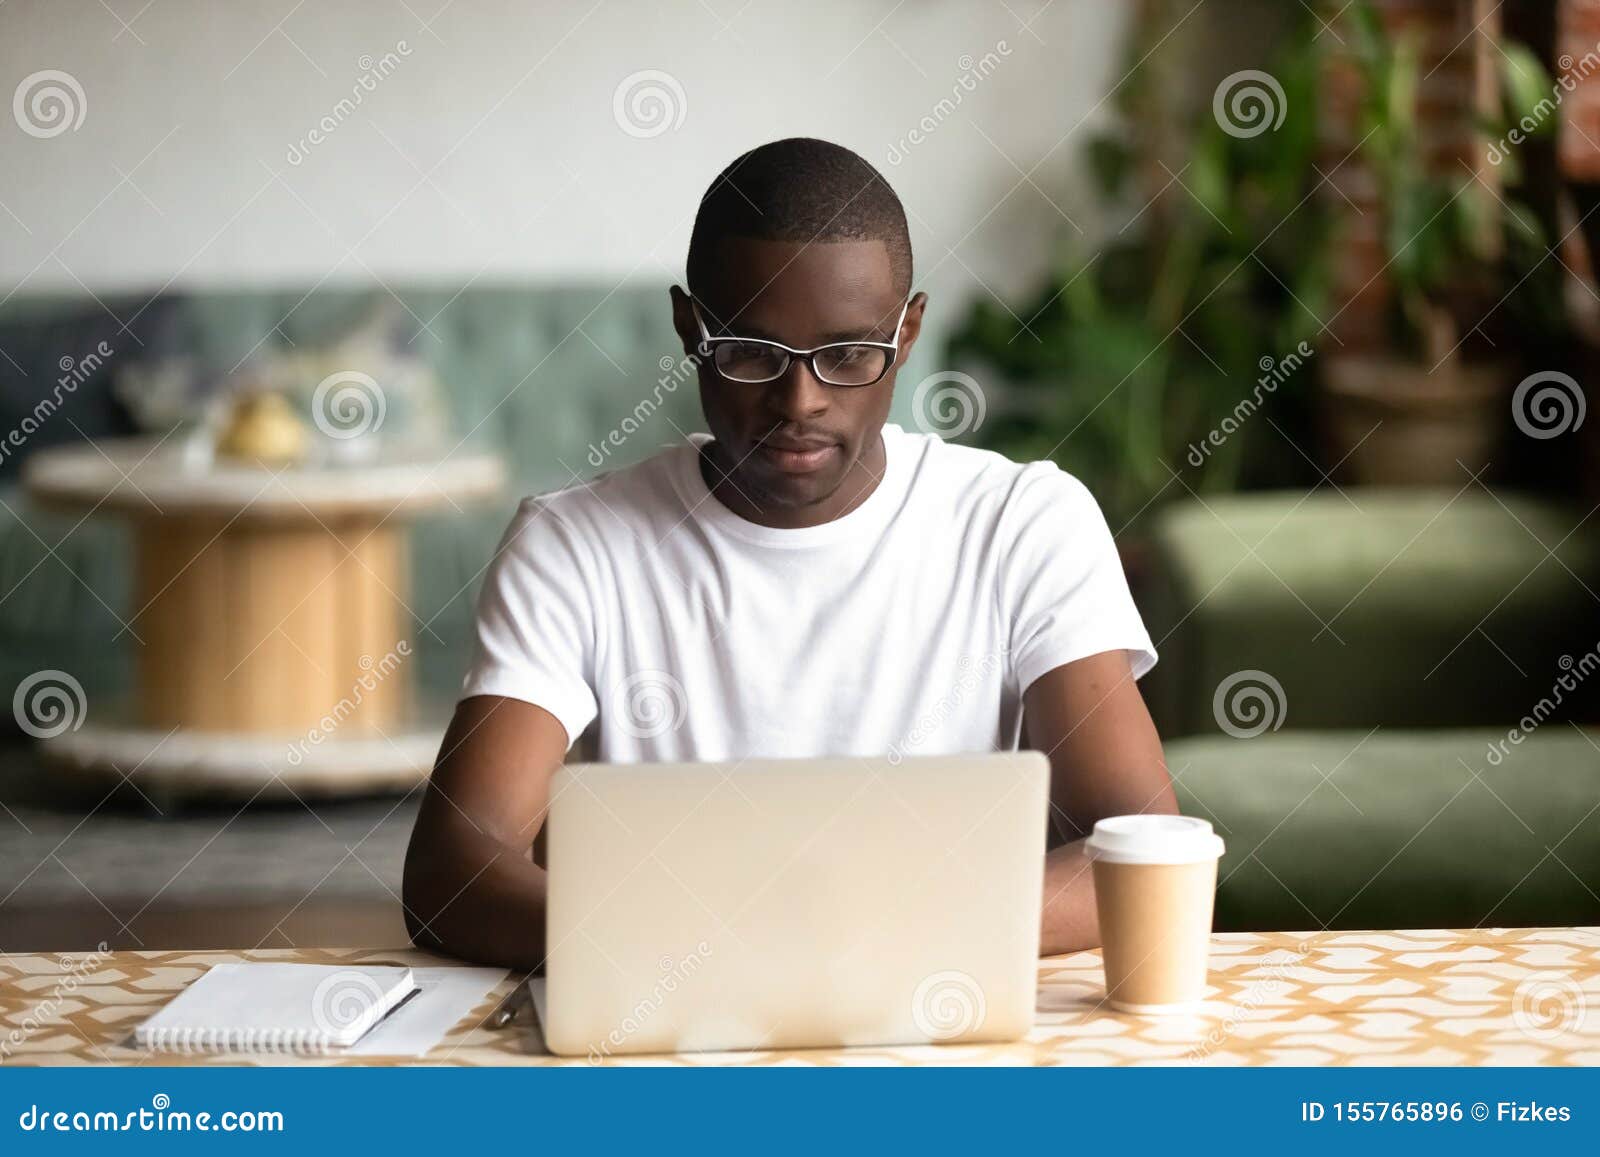 focused black man studying on laptop drinking coffee